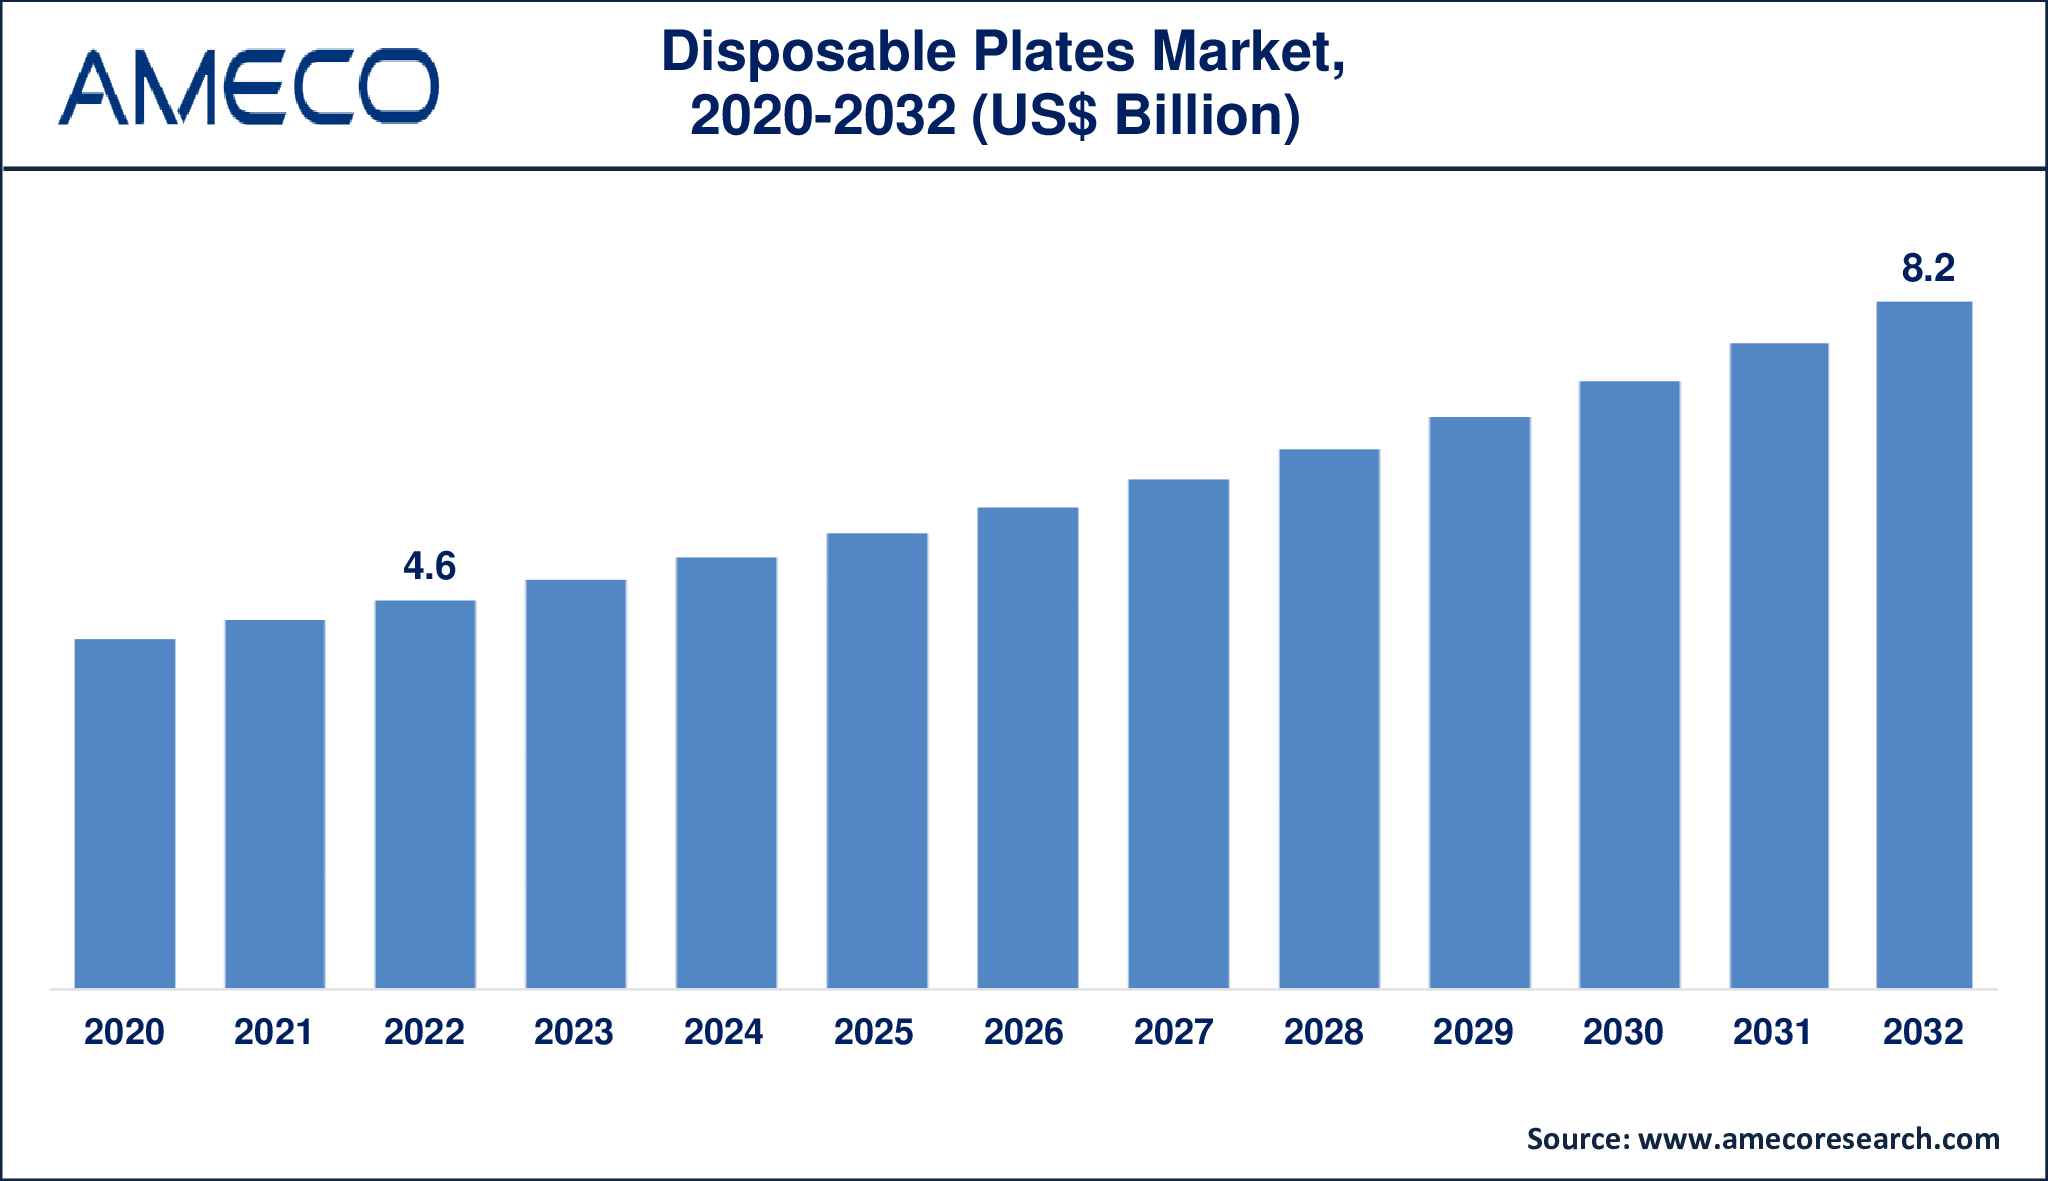 Disposable Plates Market Dynamics